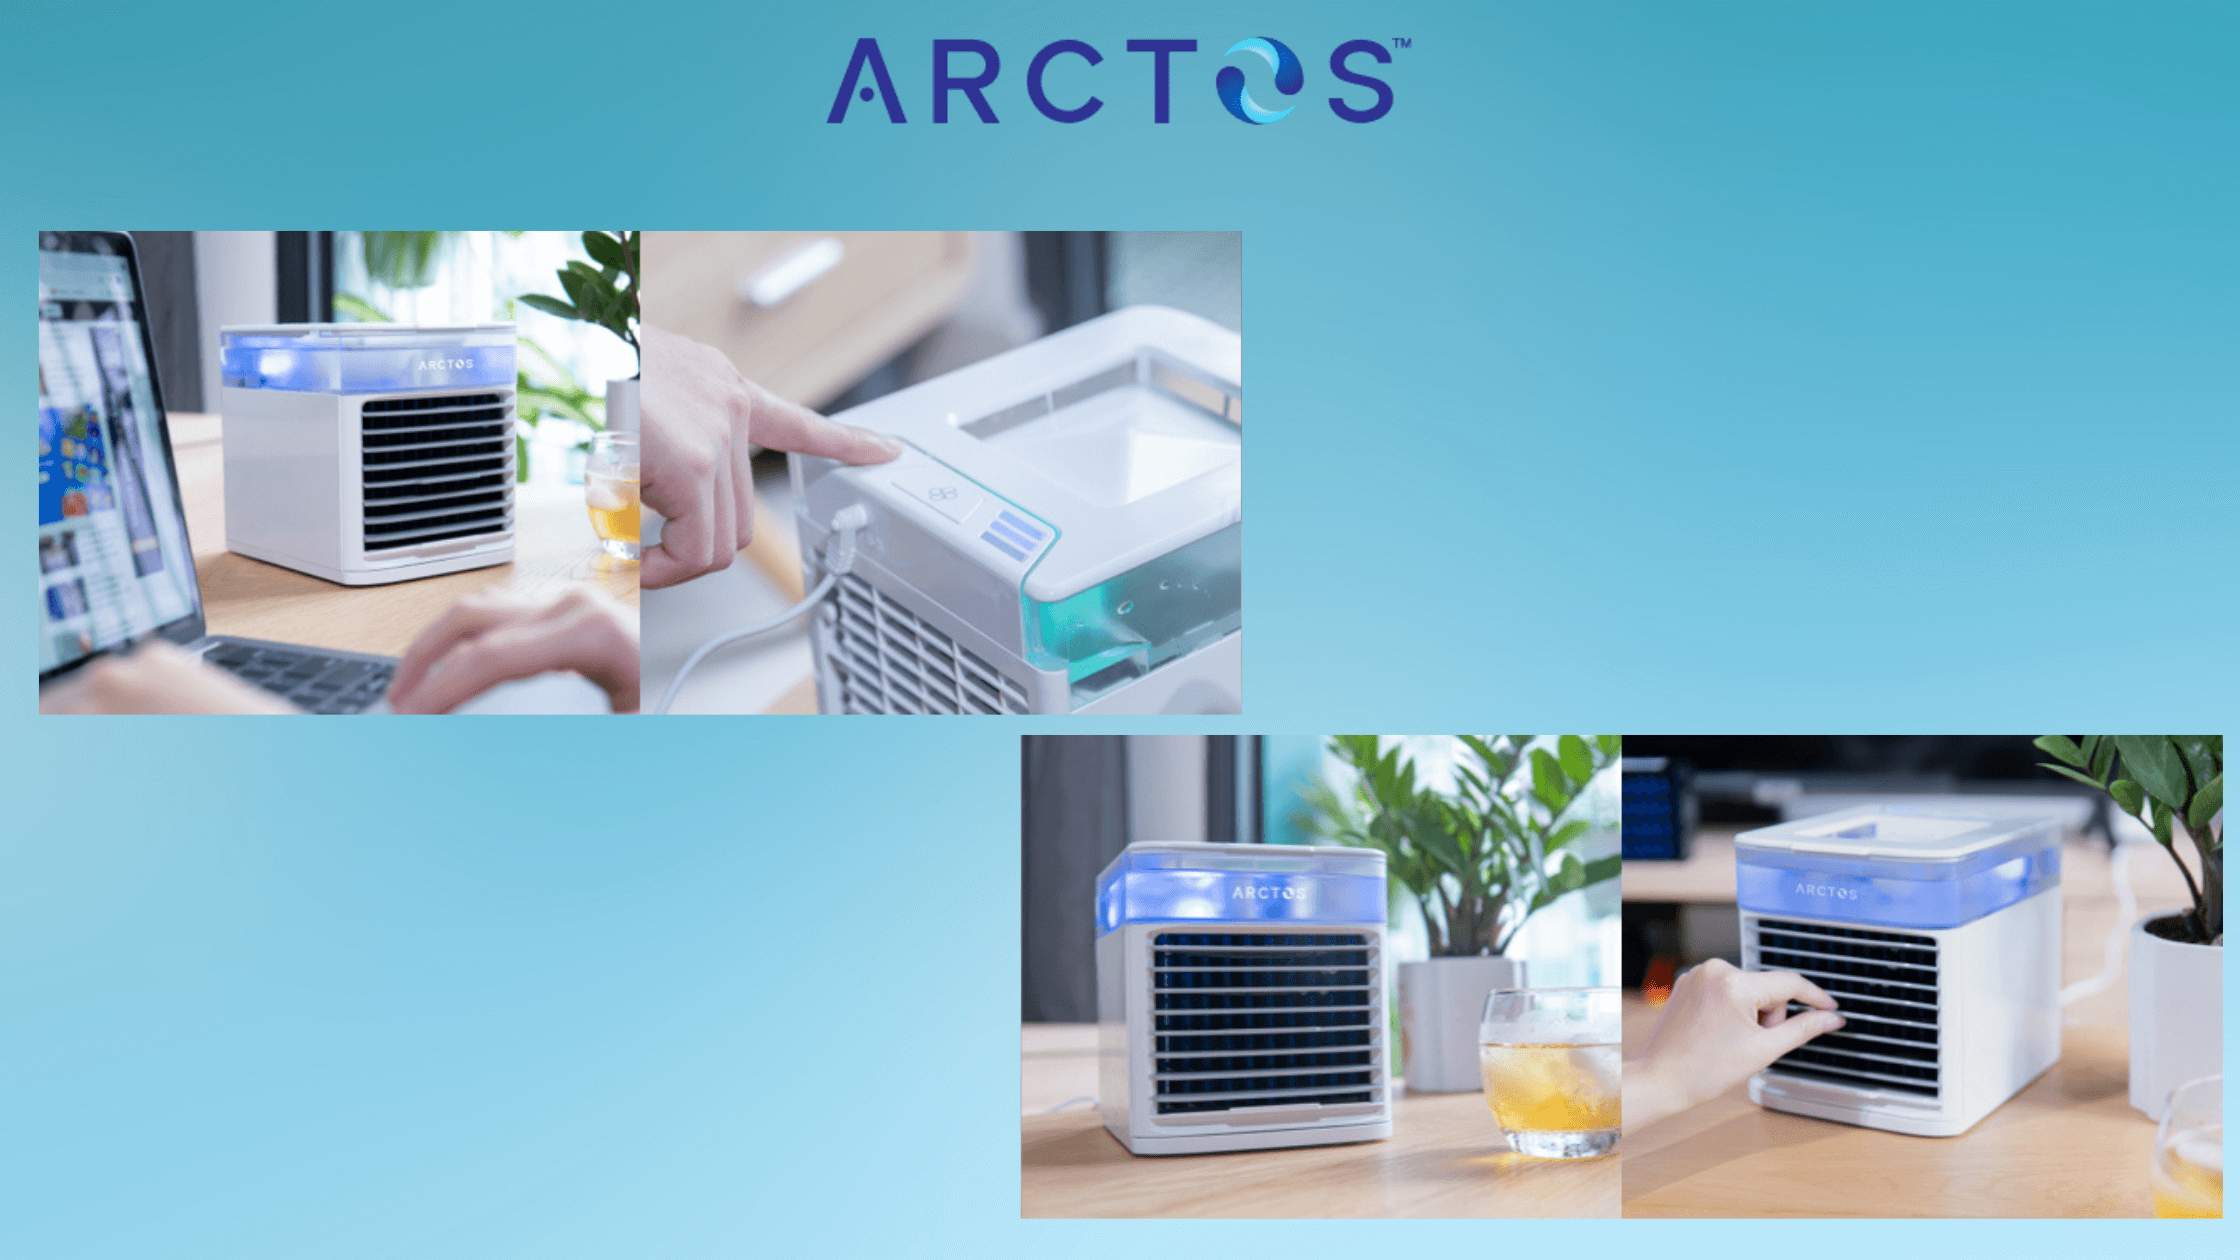 Arctos Portable AC Features